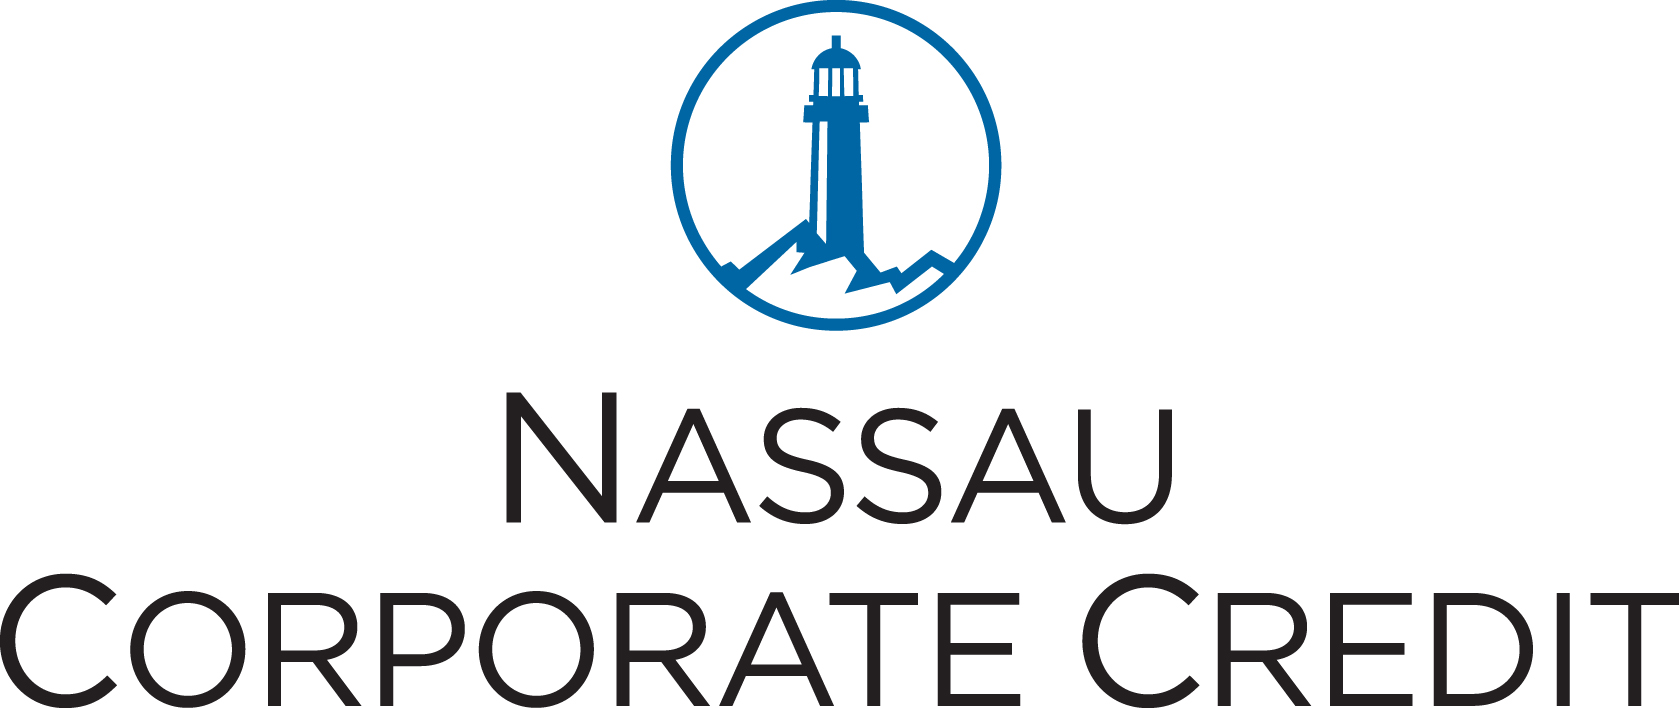 Nassau Corporate Credit Named Best US Boutique CLO Manager